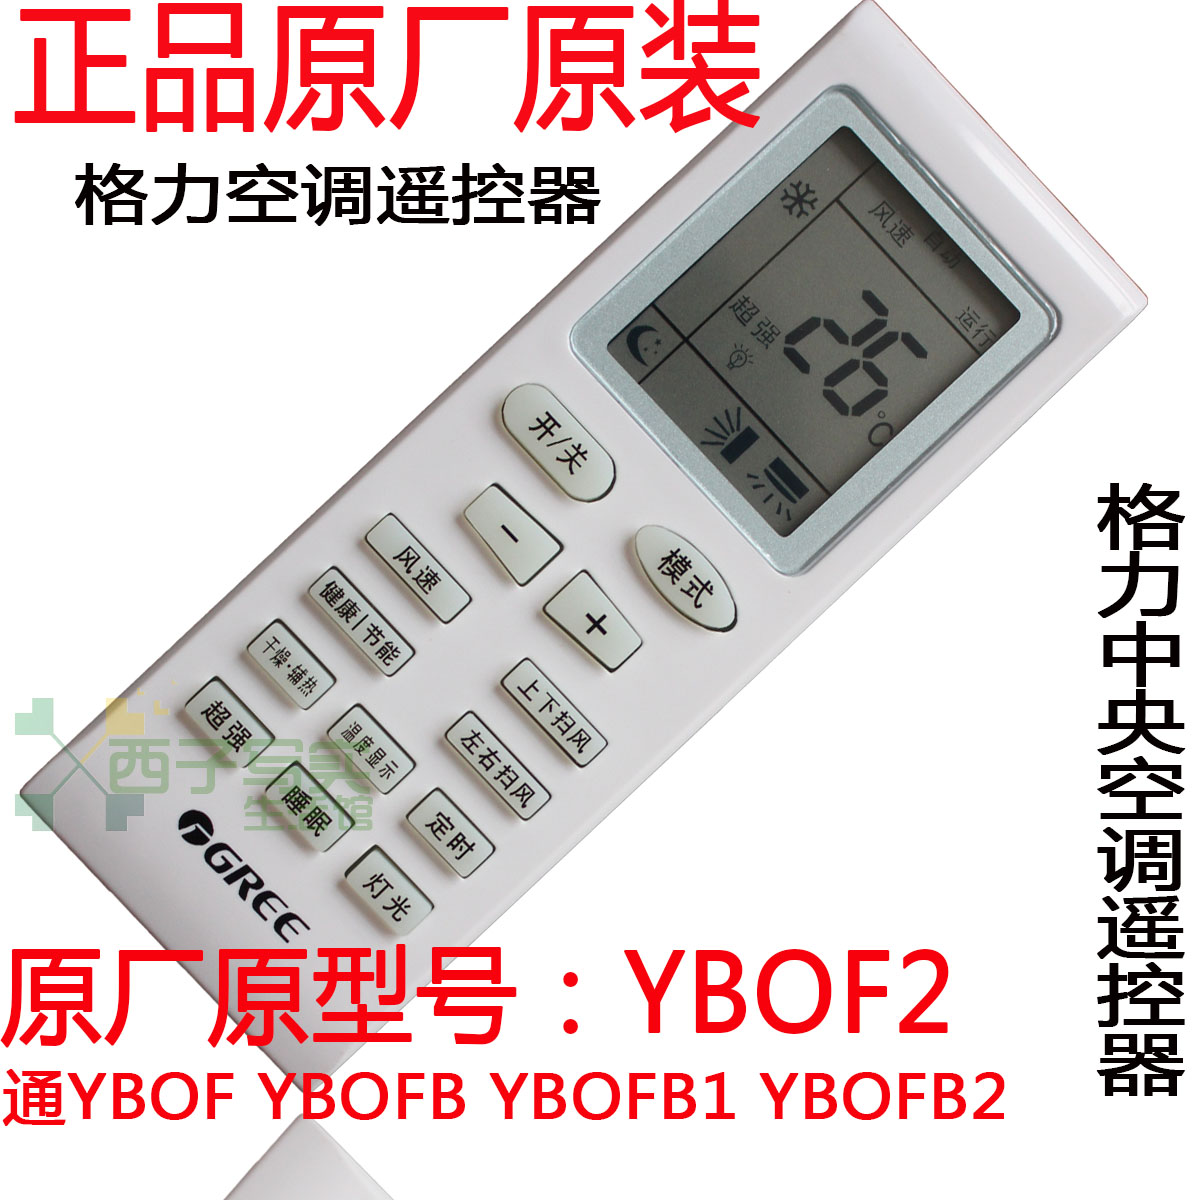 原装格力空调遥控器YBOF2/YBOF/YBOFBYBOFB1YB0FB2风管机XK27遥控